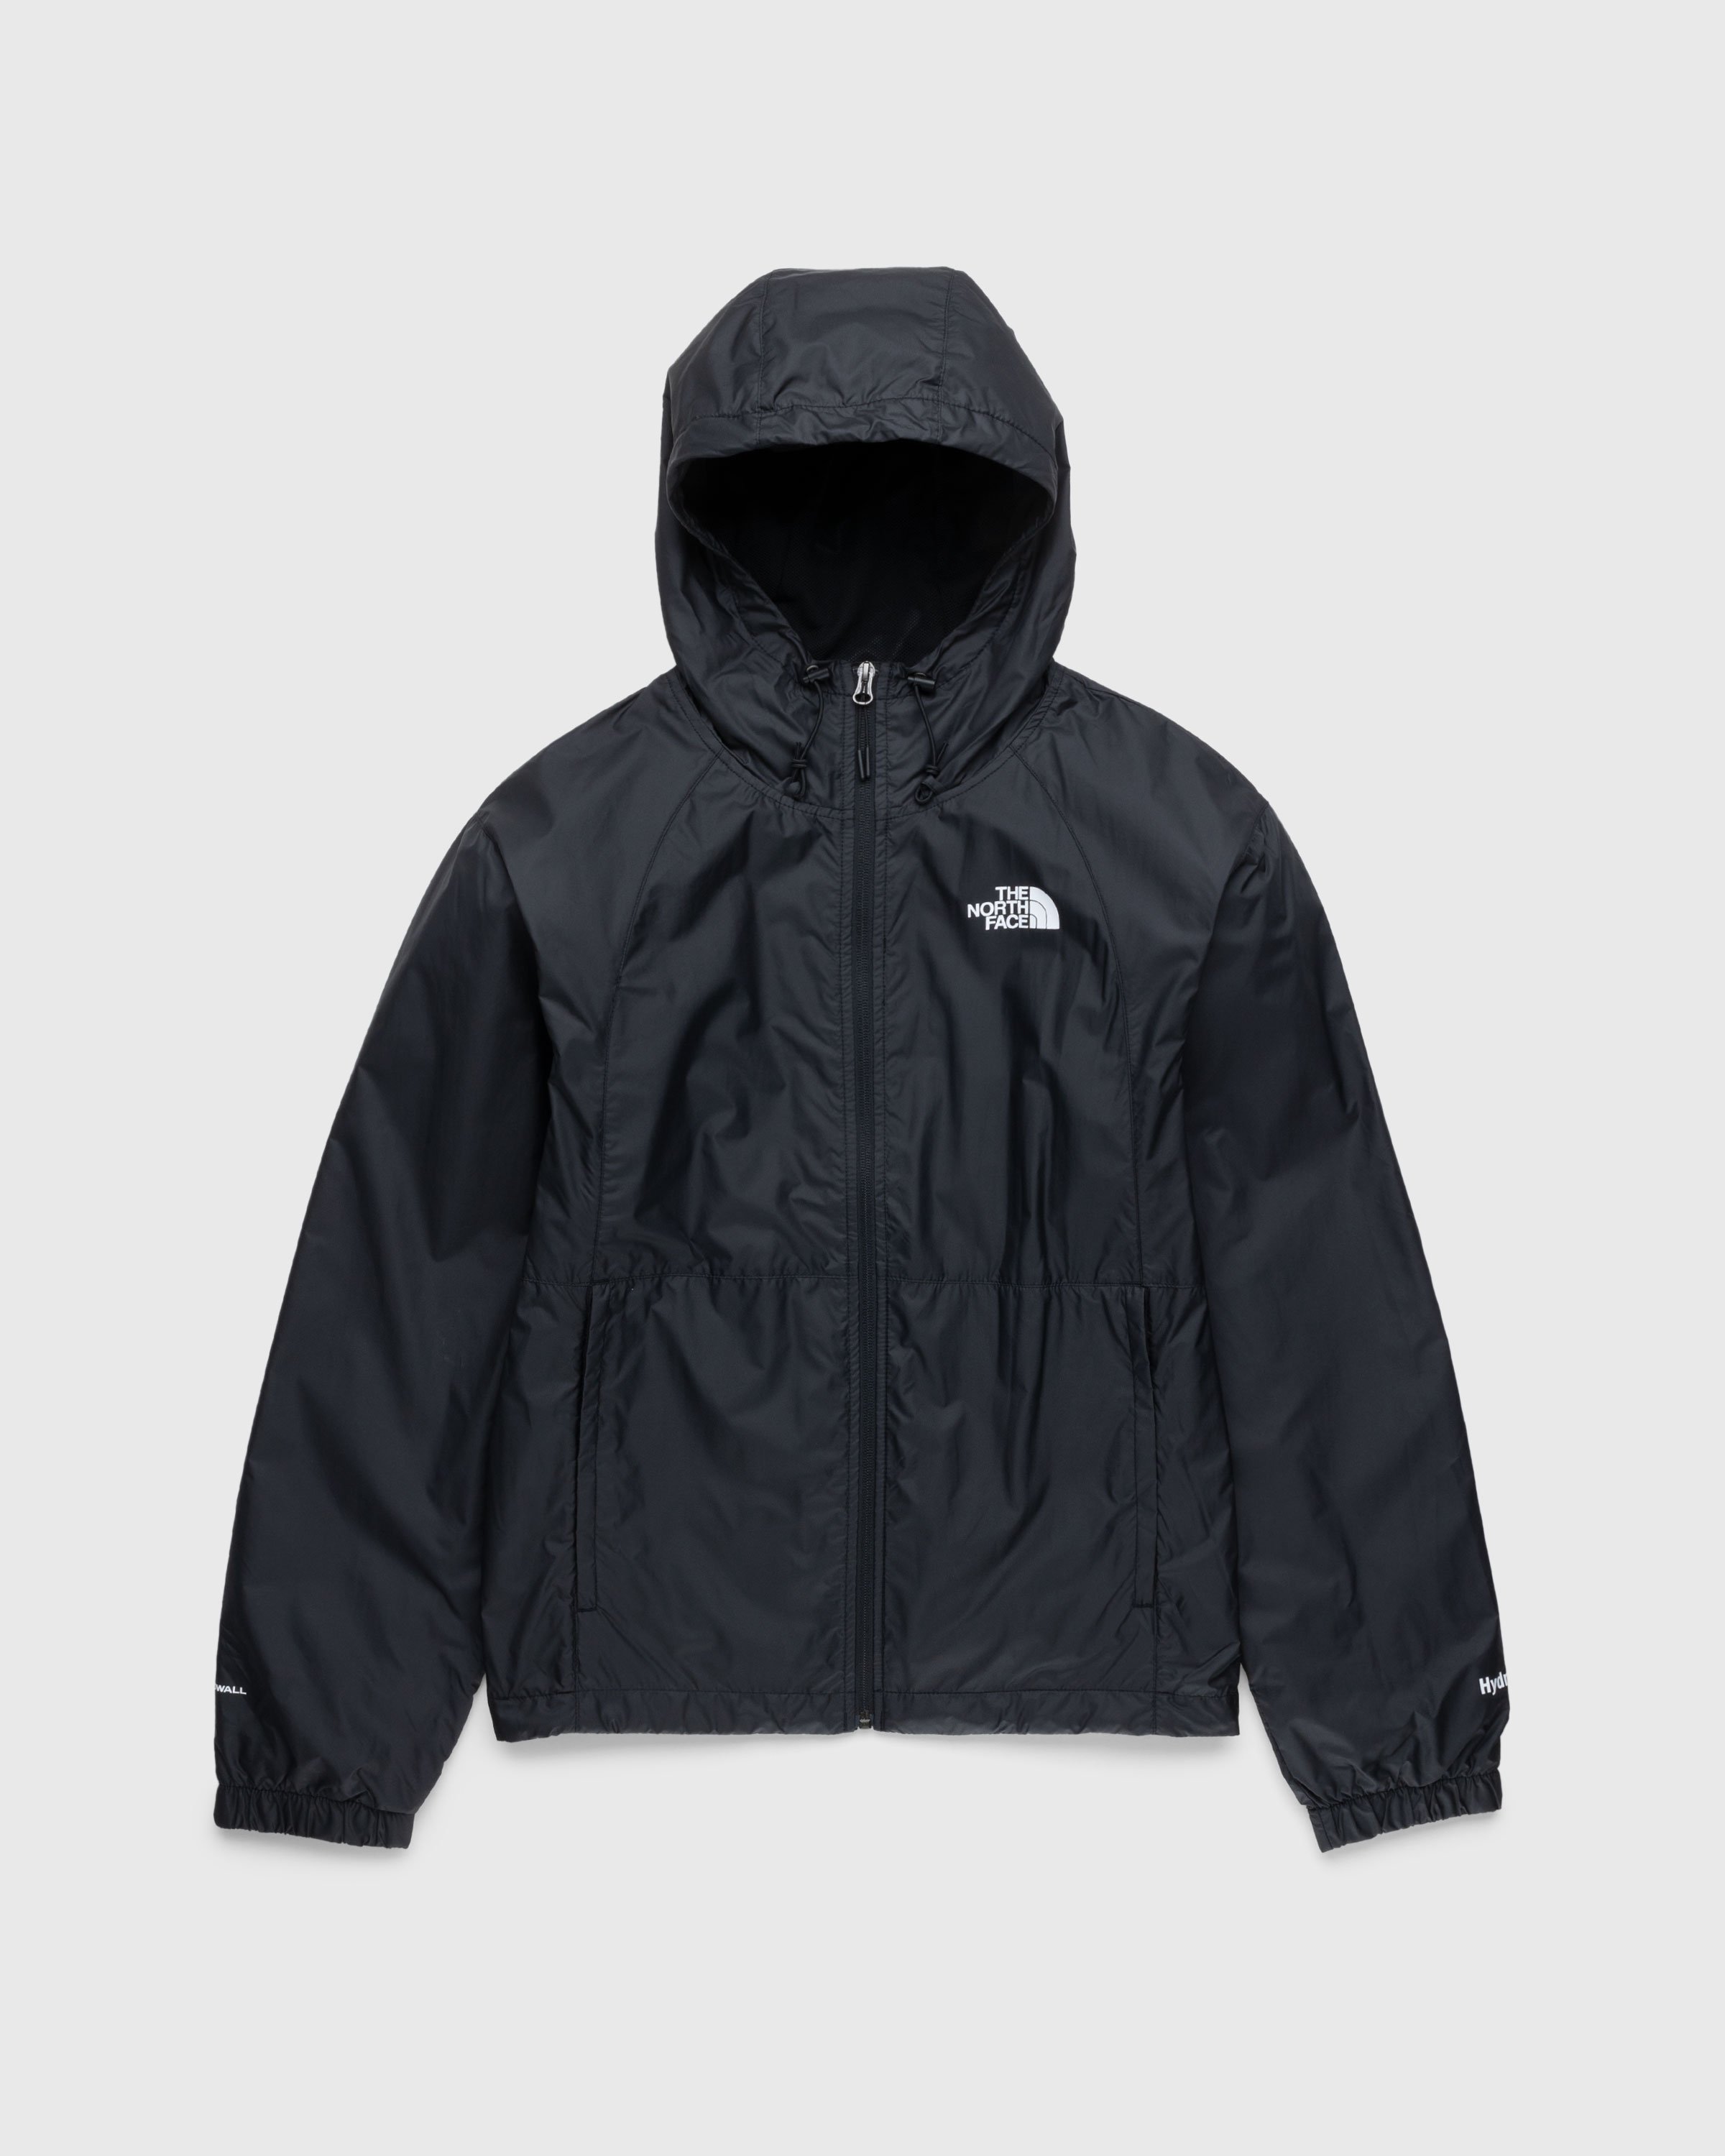 The North Face – Hydrenaline Jacket 2000 TNF Black | Highsnobiety Shop